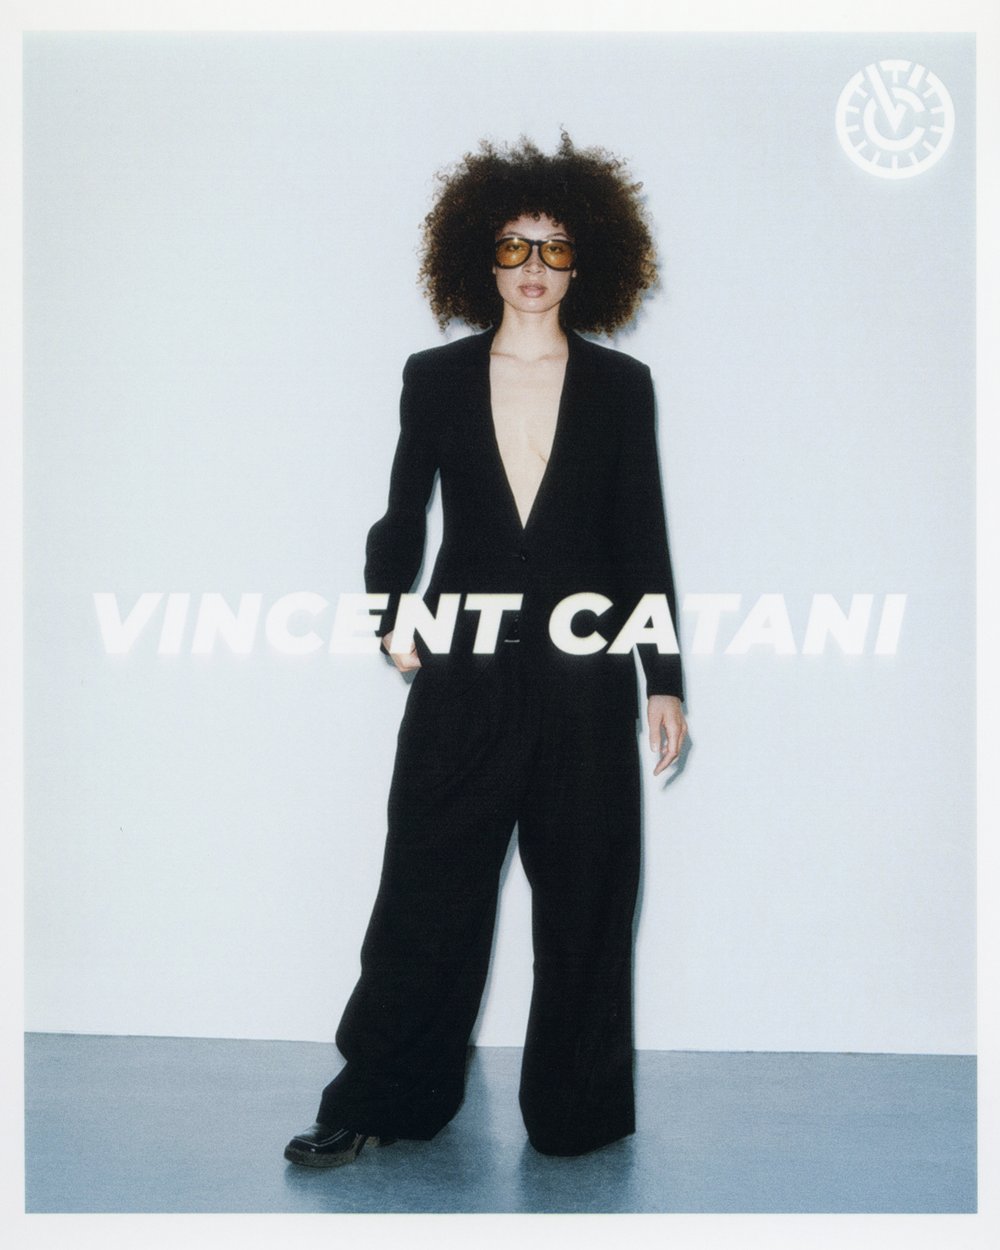 vincent_catani_sunglasses_hypend_scandinavian_streetwear__SCAN_0064 copy.jpg